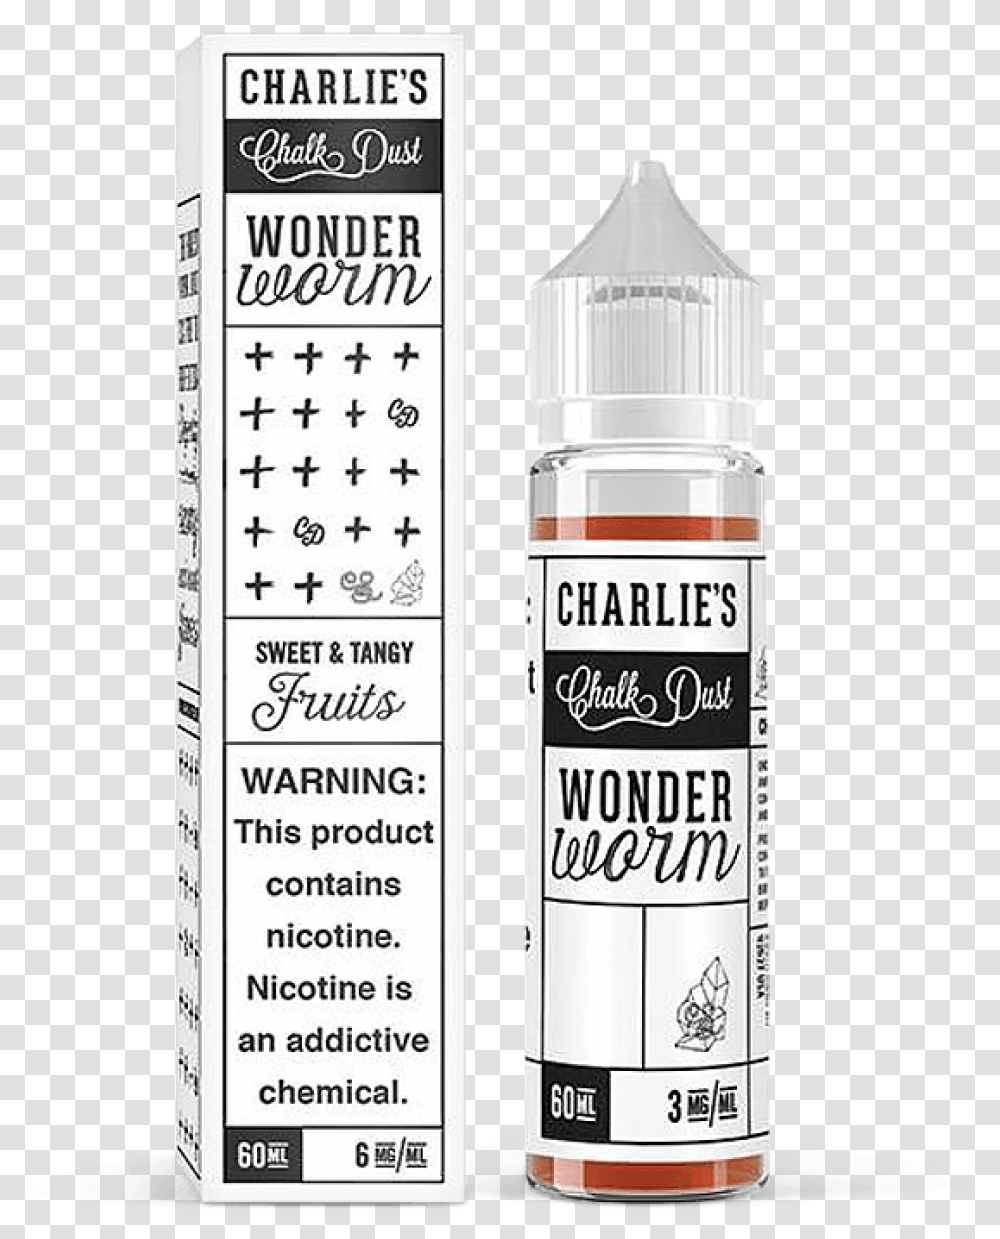 Charlies Chalk Dust Wonder Worm, Label, Bottle, Shaker Transparent Png